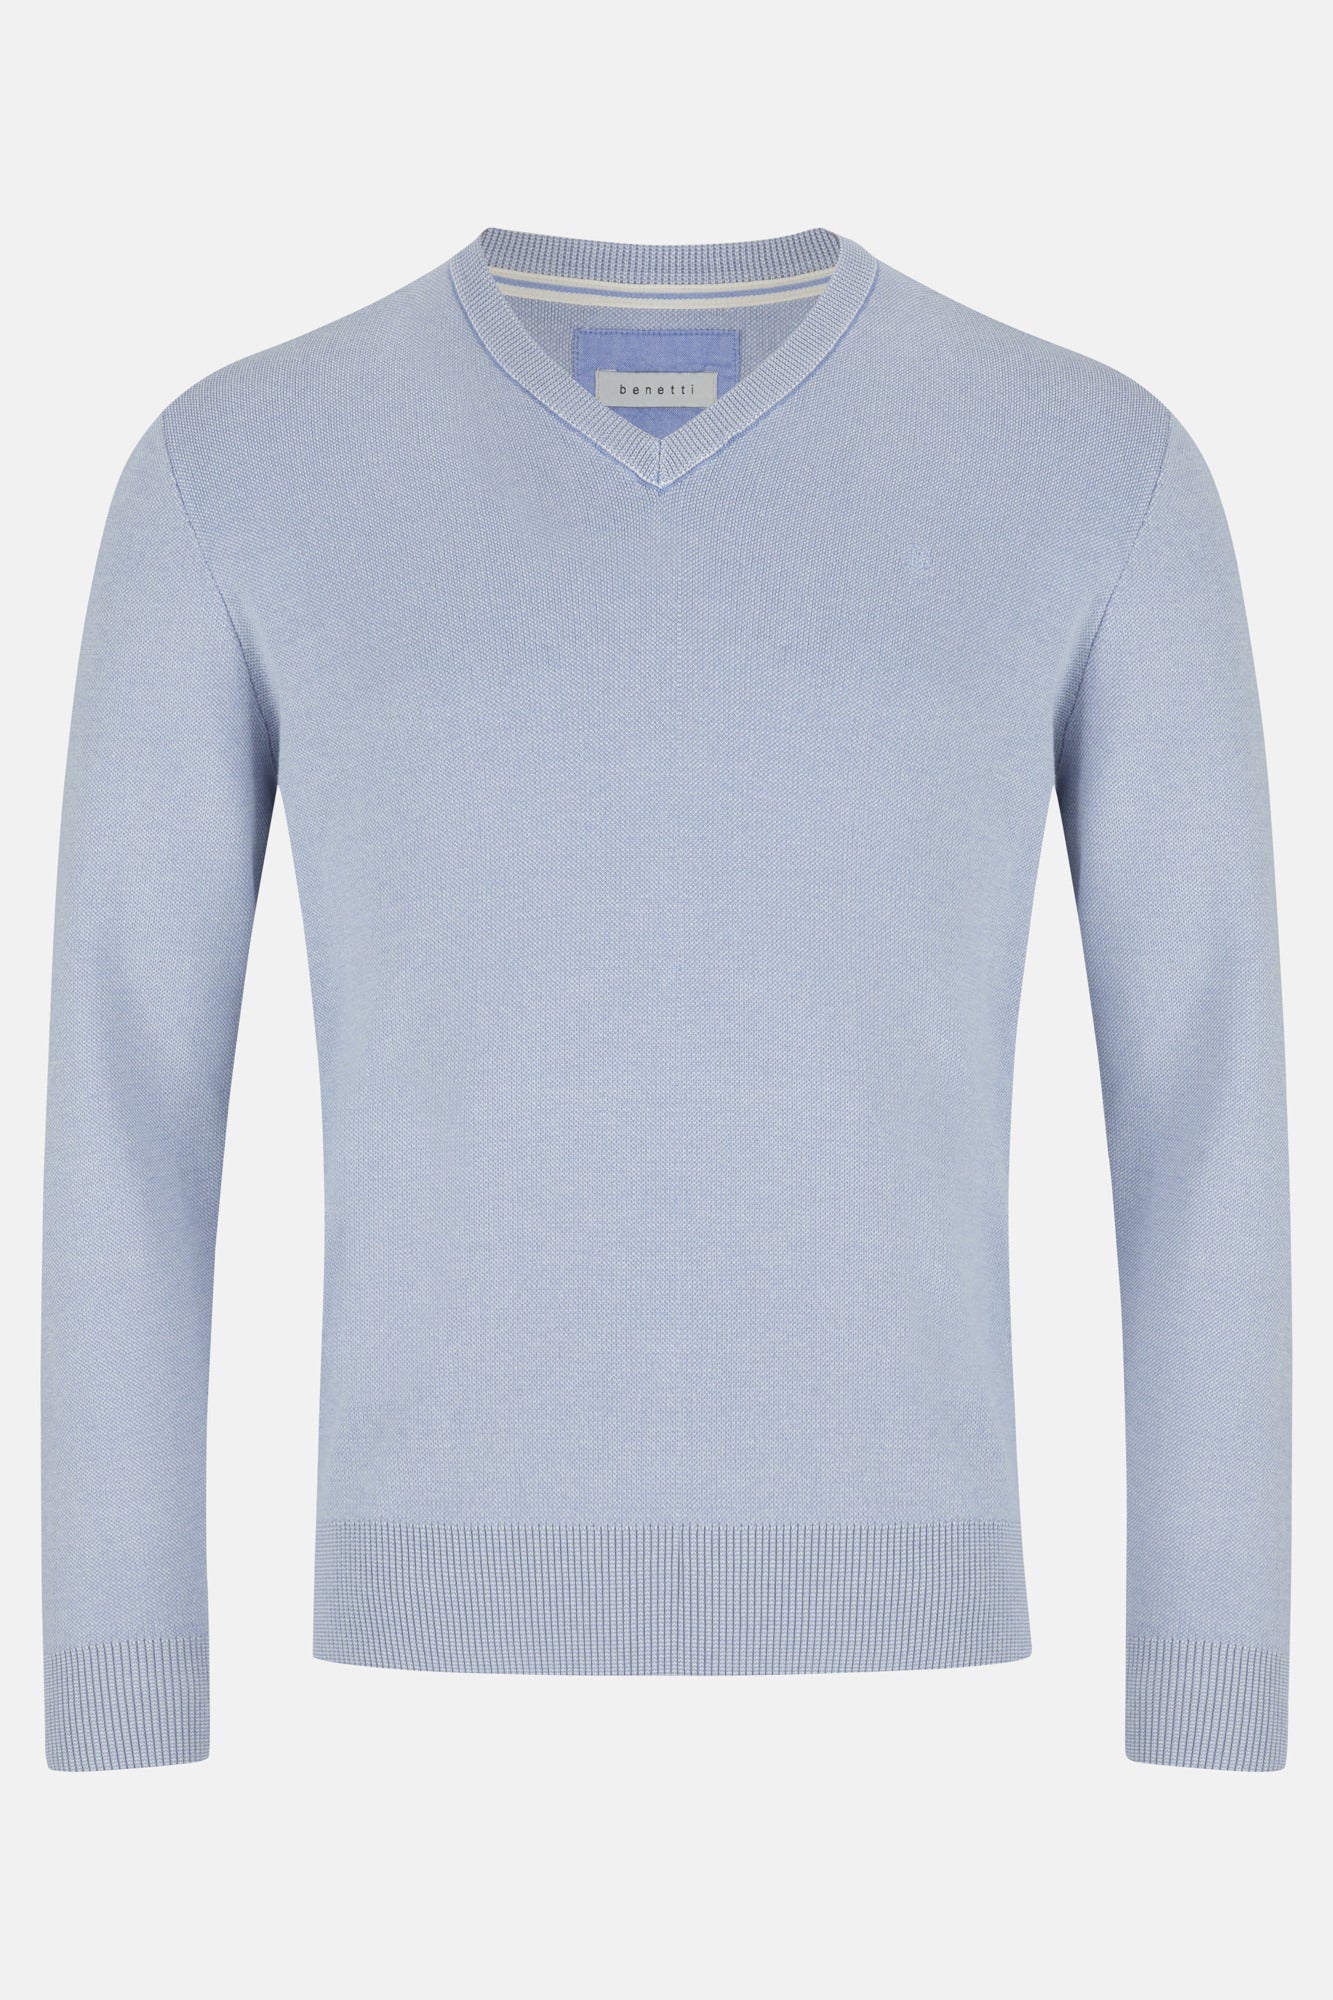 Benetti Gale Sky V- neck Sweater 